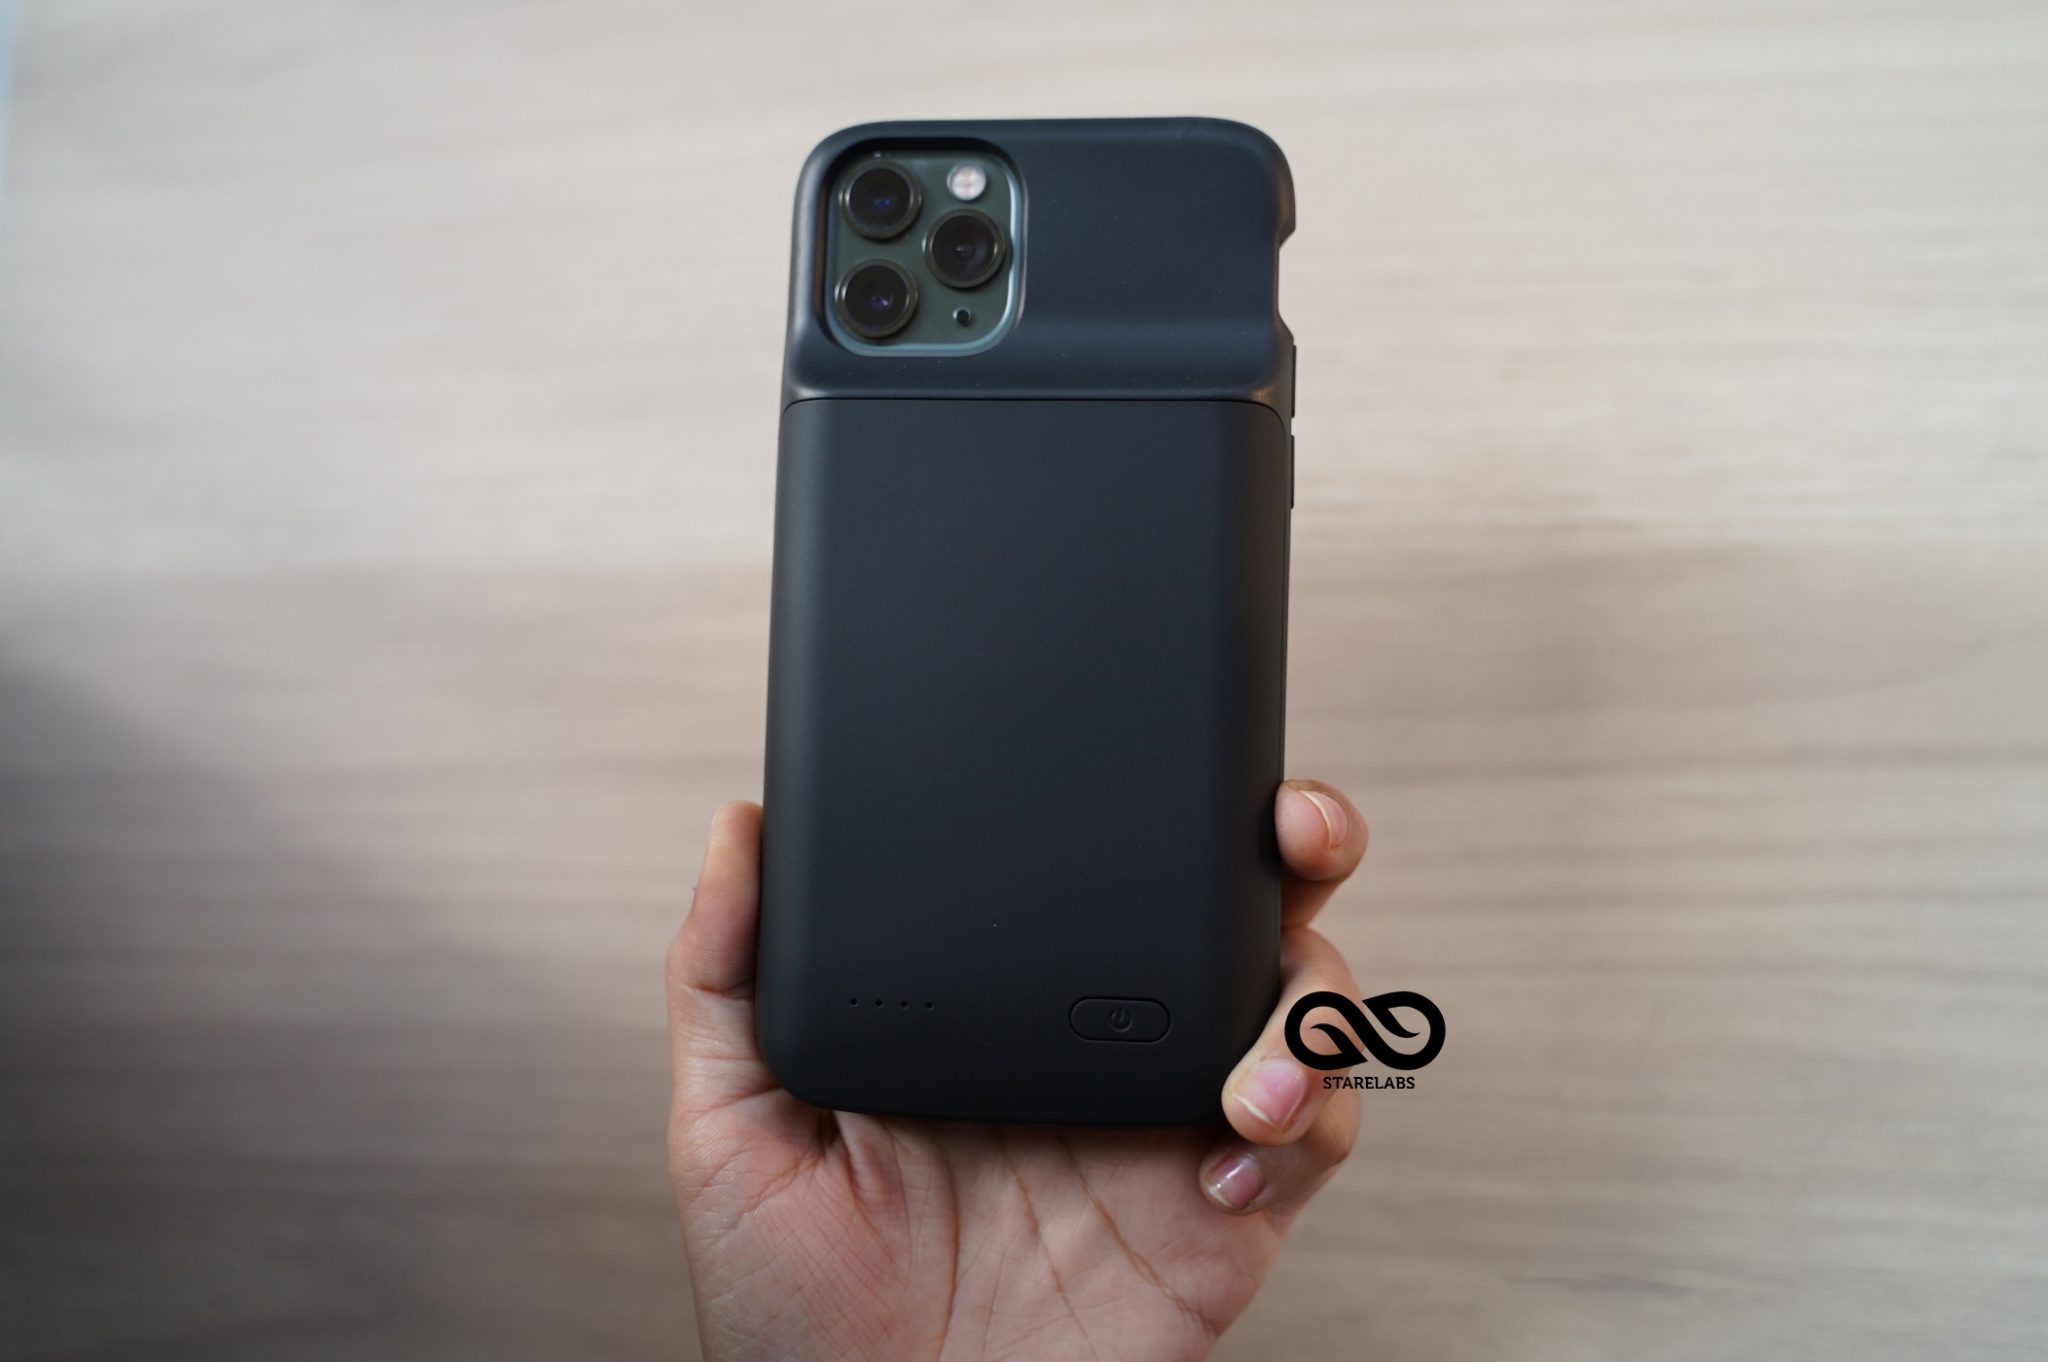 Apple iPhone 14 Pro Max Battery Case - 4800mAH